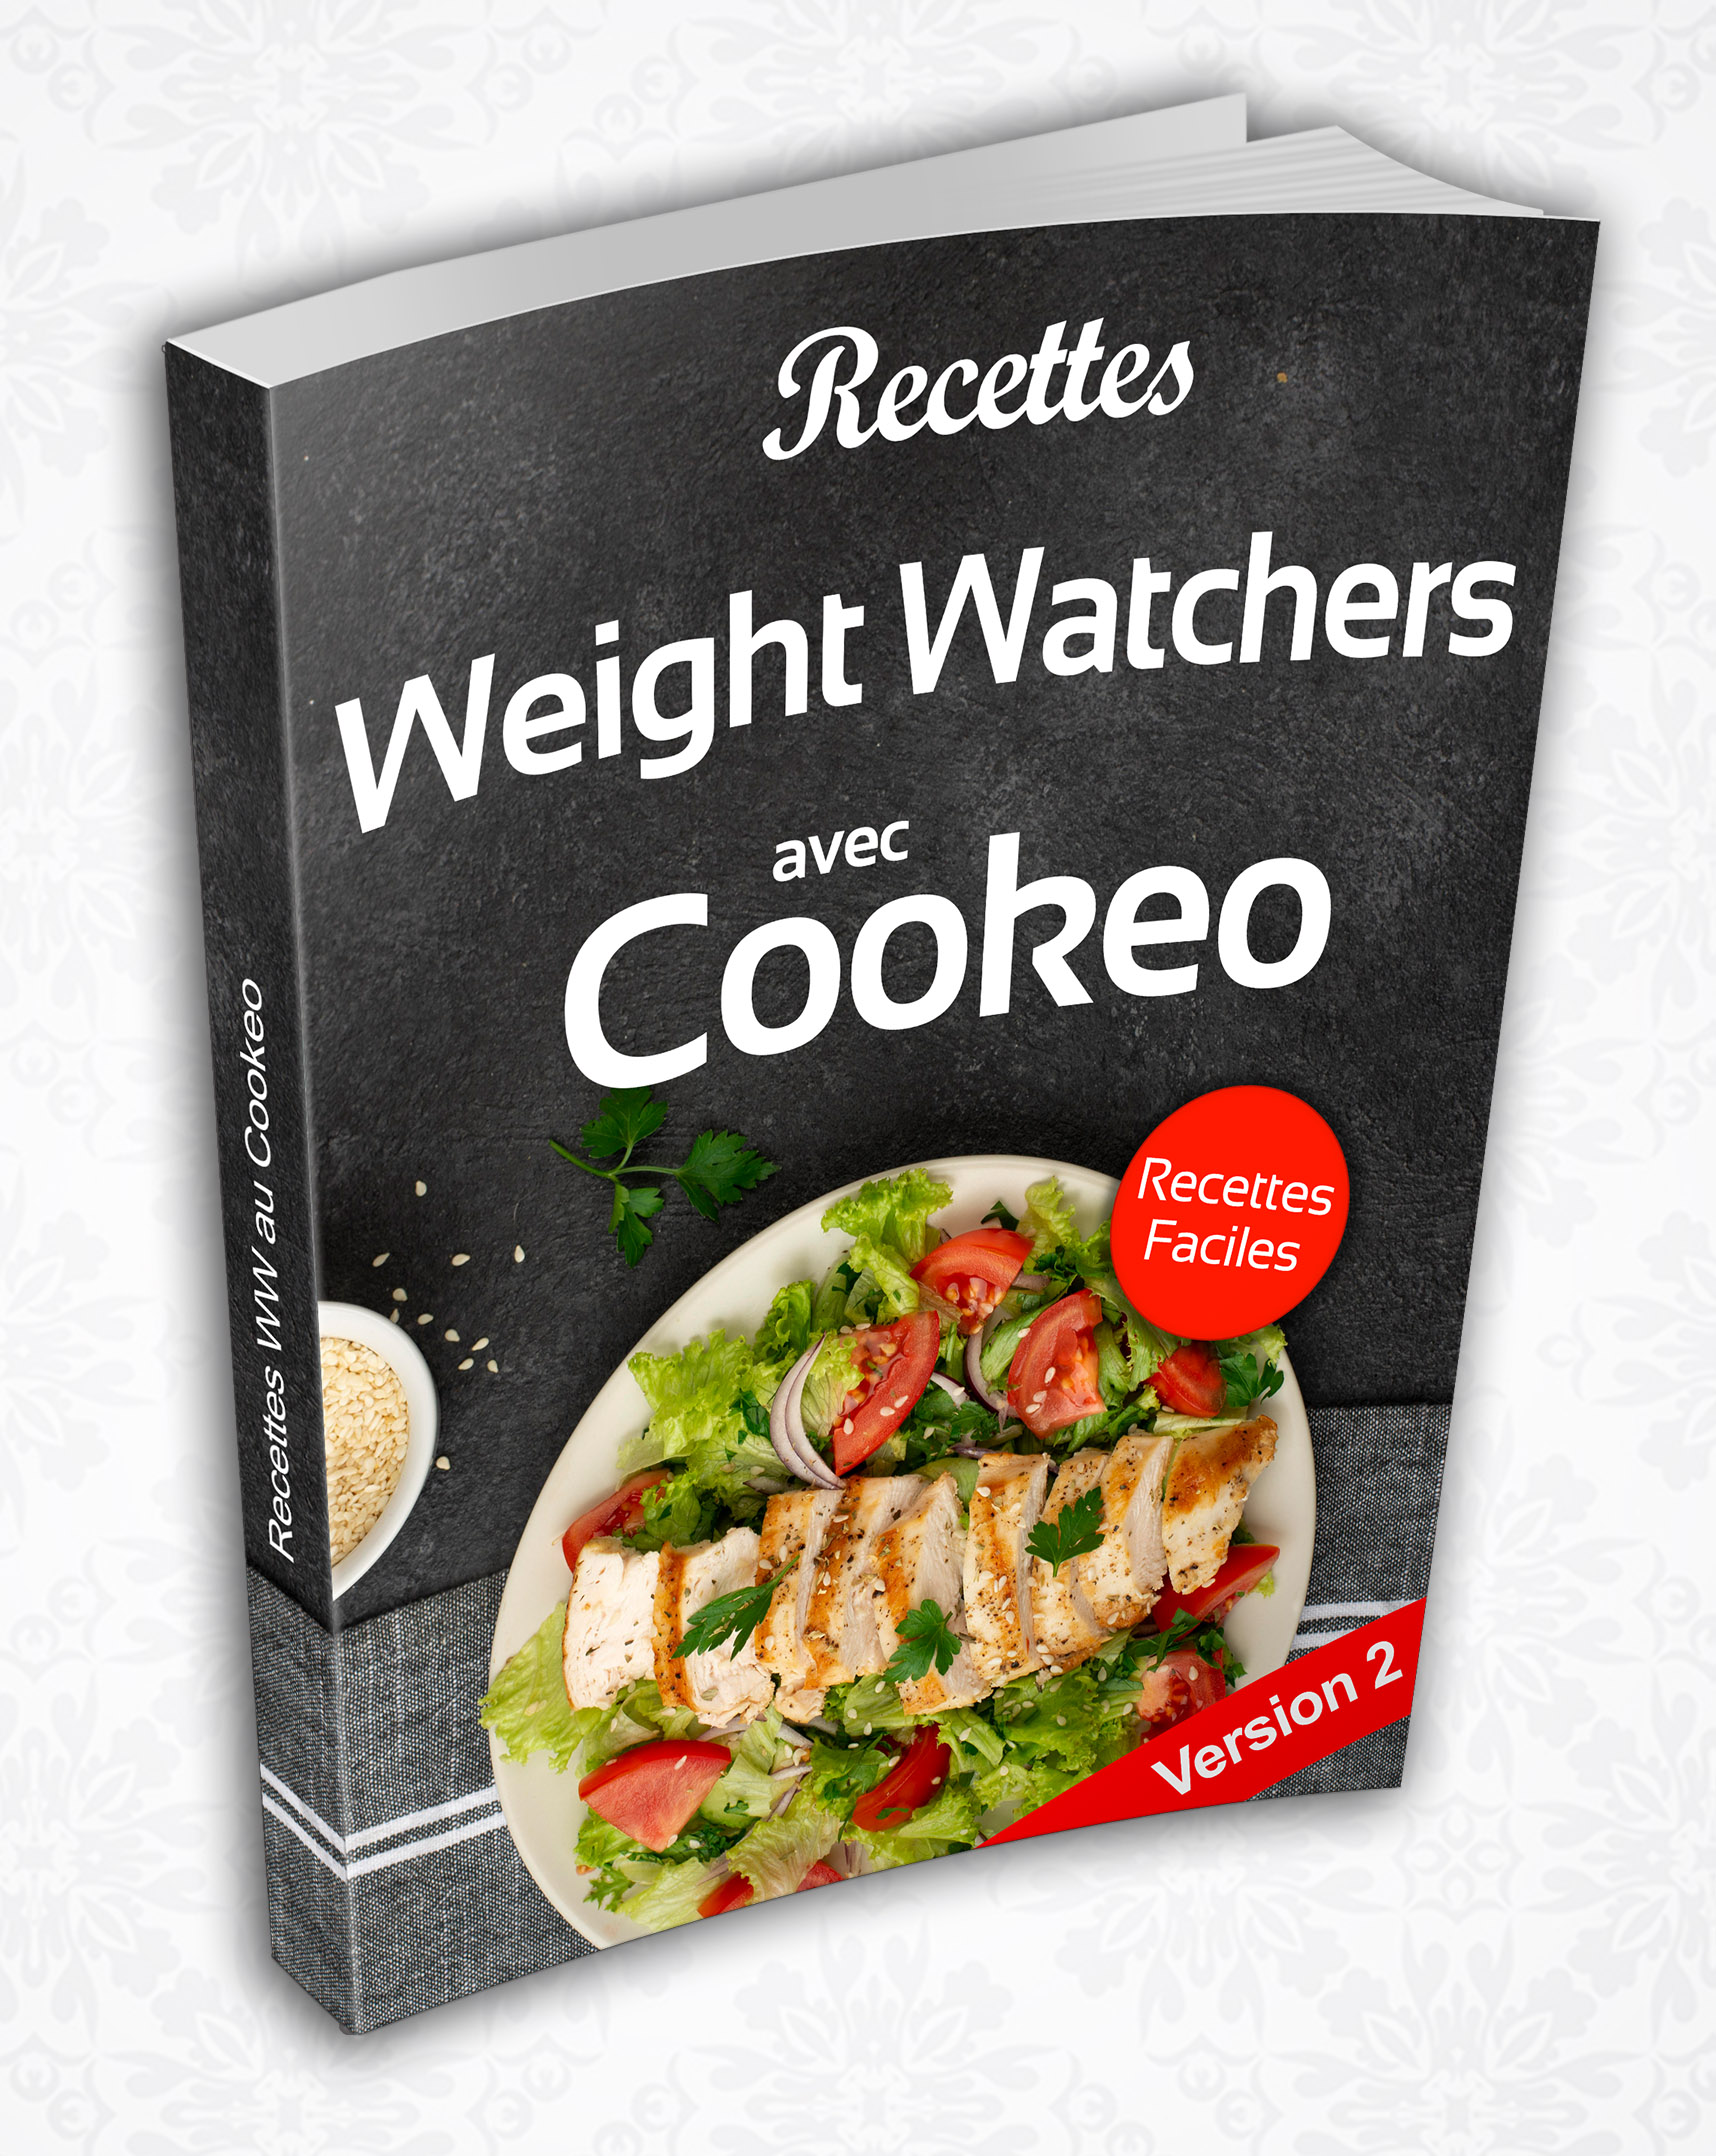 Recettes Weight Watchers au Cookeo: 90 recettes WW au Cookeo faciles et  équilibrées by Lightlife Edition